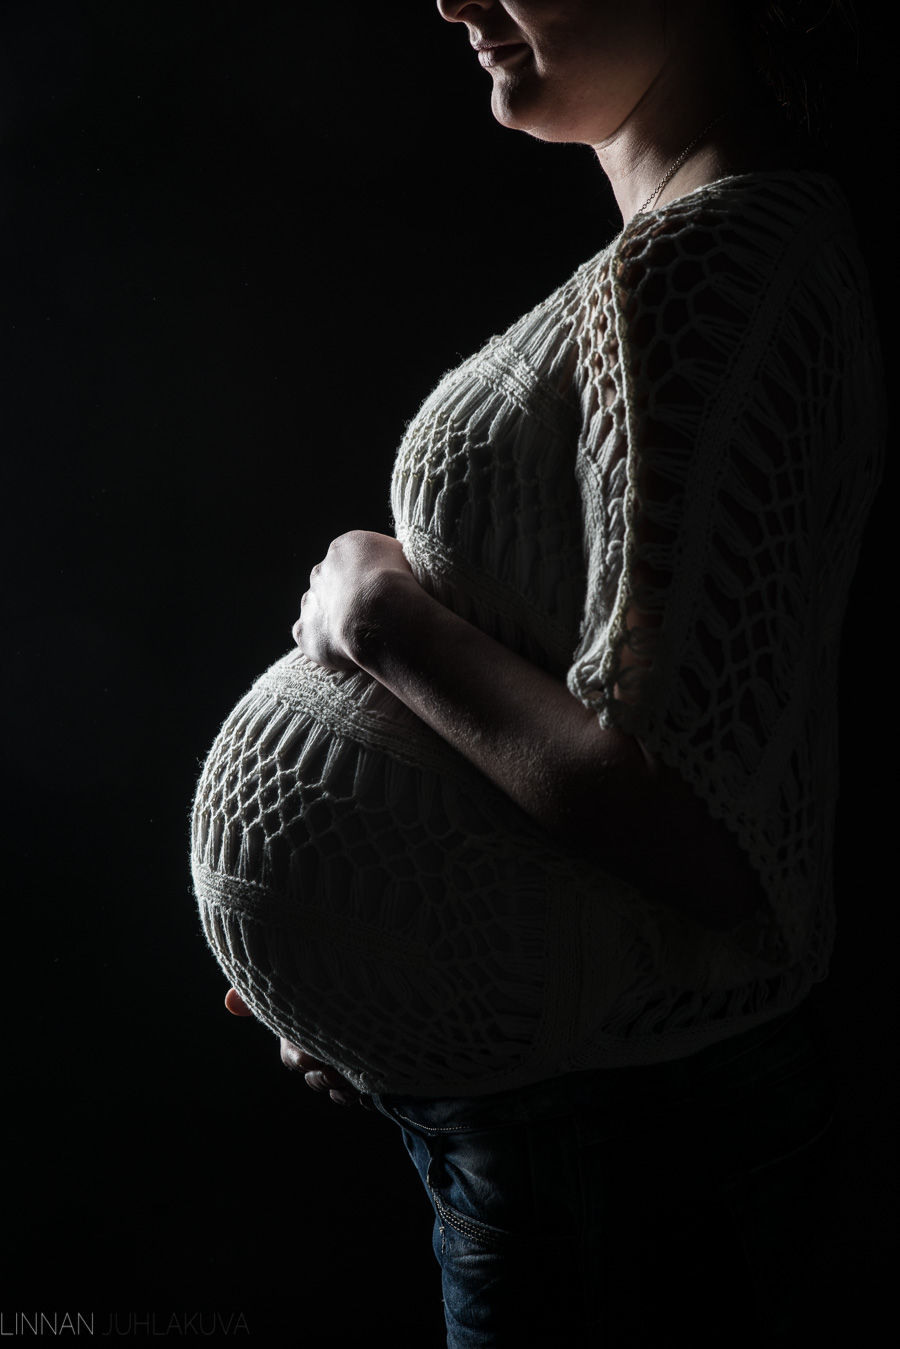 raskausajan valokuvaus linnan juhlakuva-4.jpg